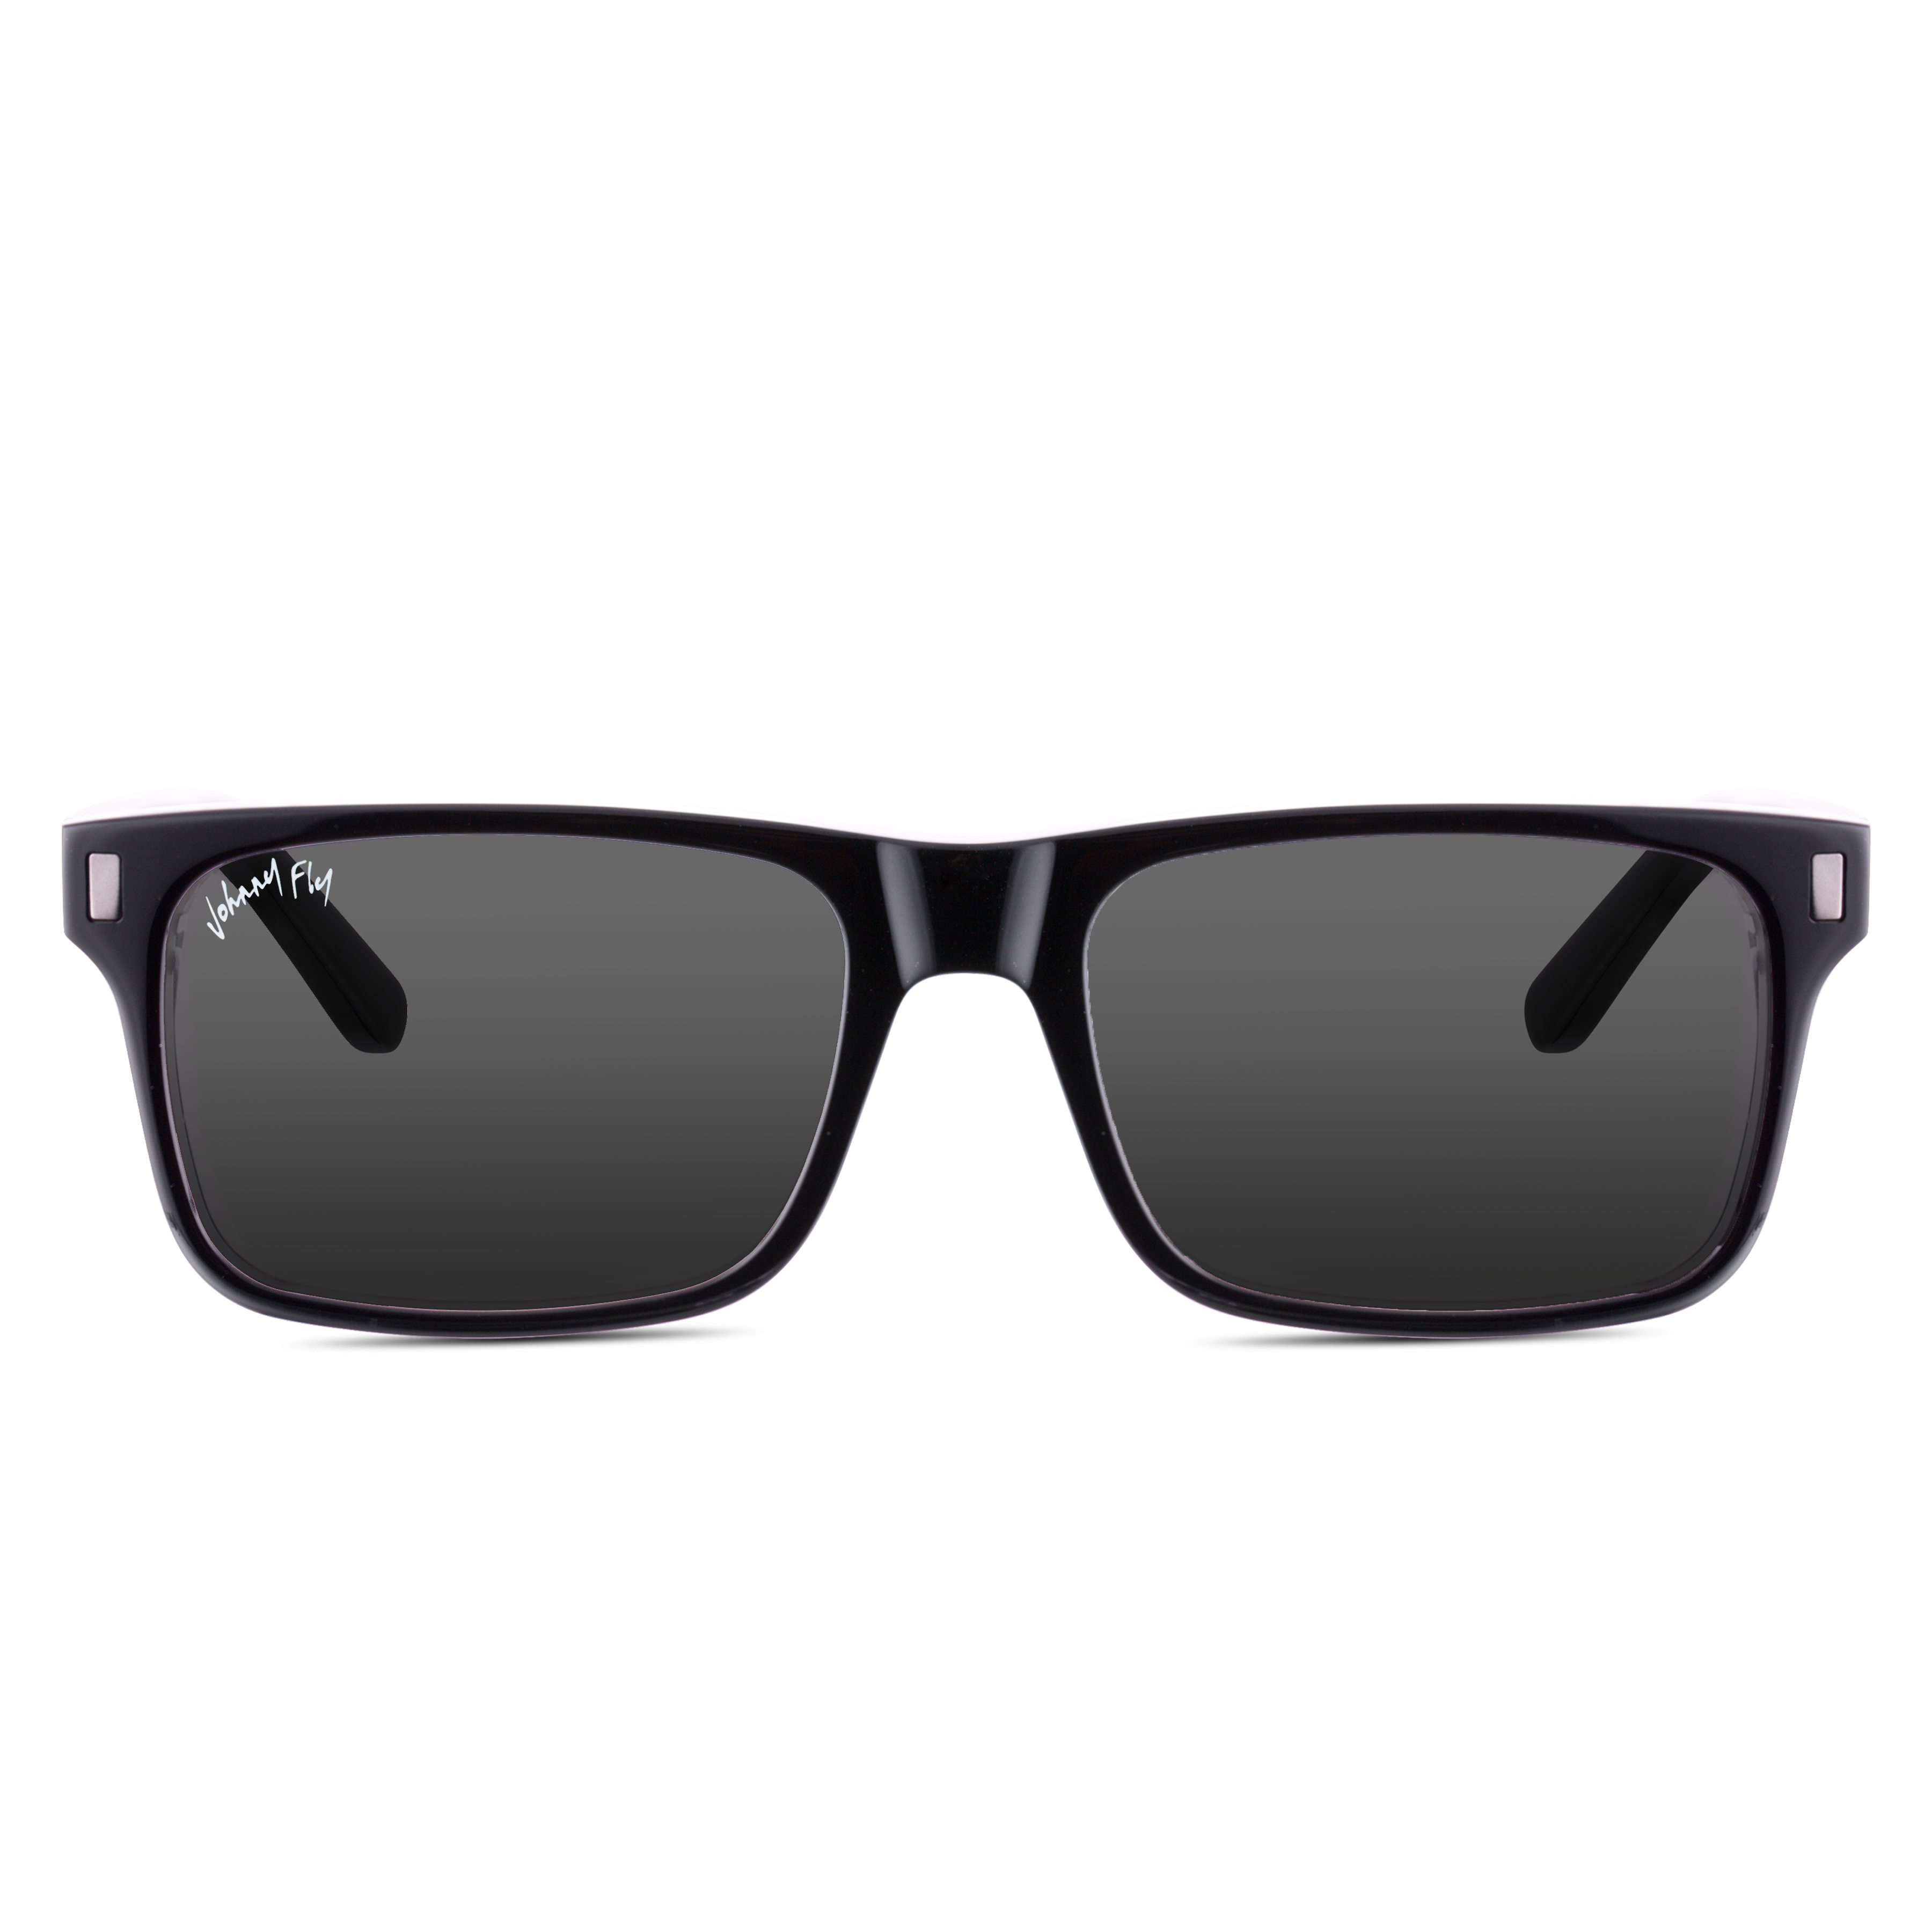 7FIFTY7 - Black Crystal - Sunglasses - Johnny Fly Eyewear | 